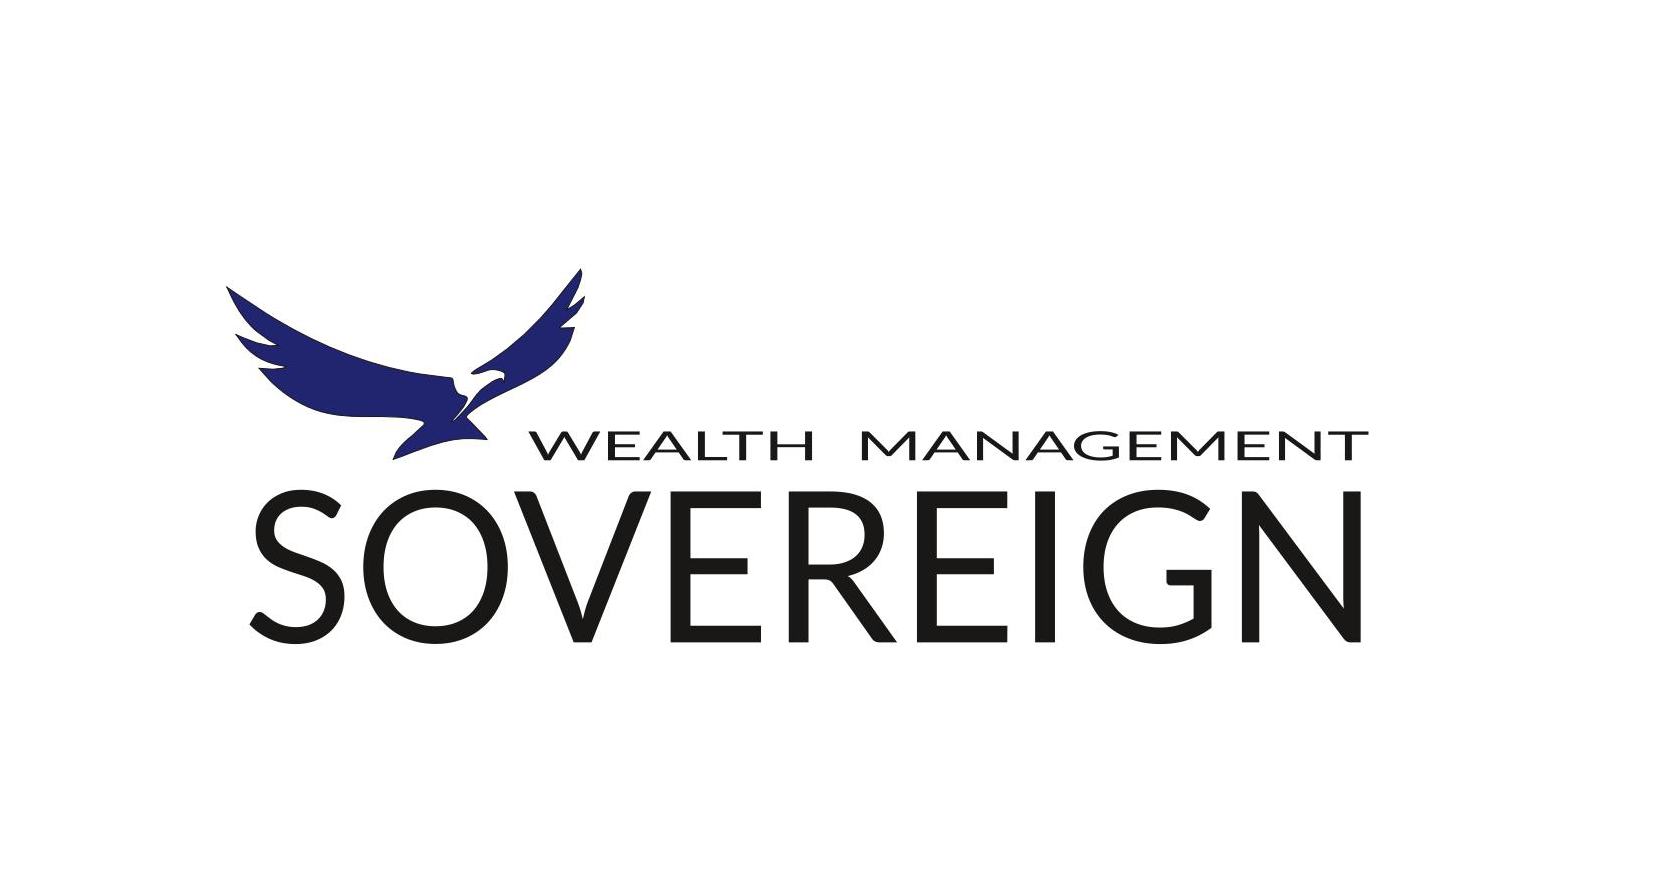 Sovereign LLC